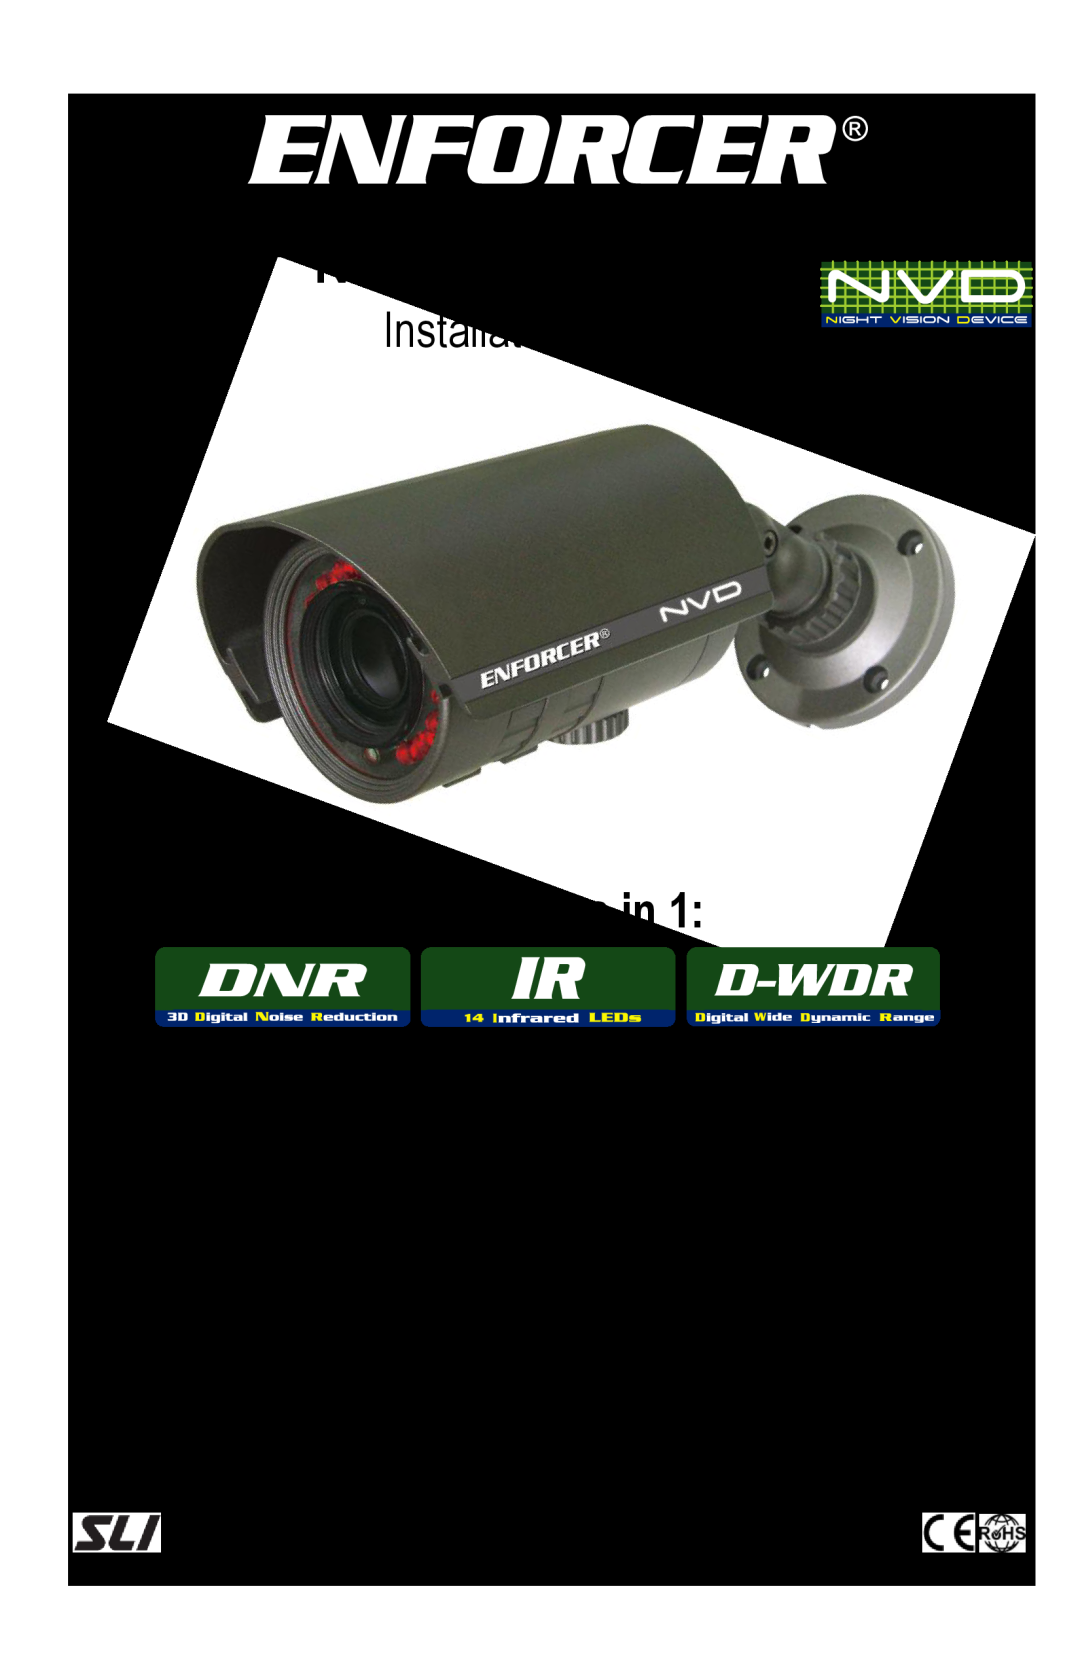 SECO-LARM USA EV-1626-NWGQ installation manual NVD Bullet Cameras, Installation Manual, Cameras in, EV-1626-NKGQ NTSC 